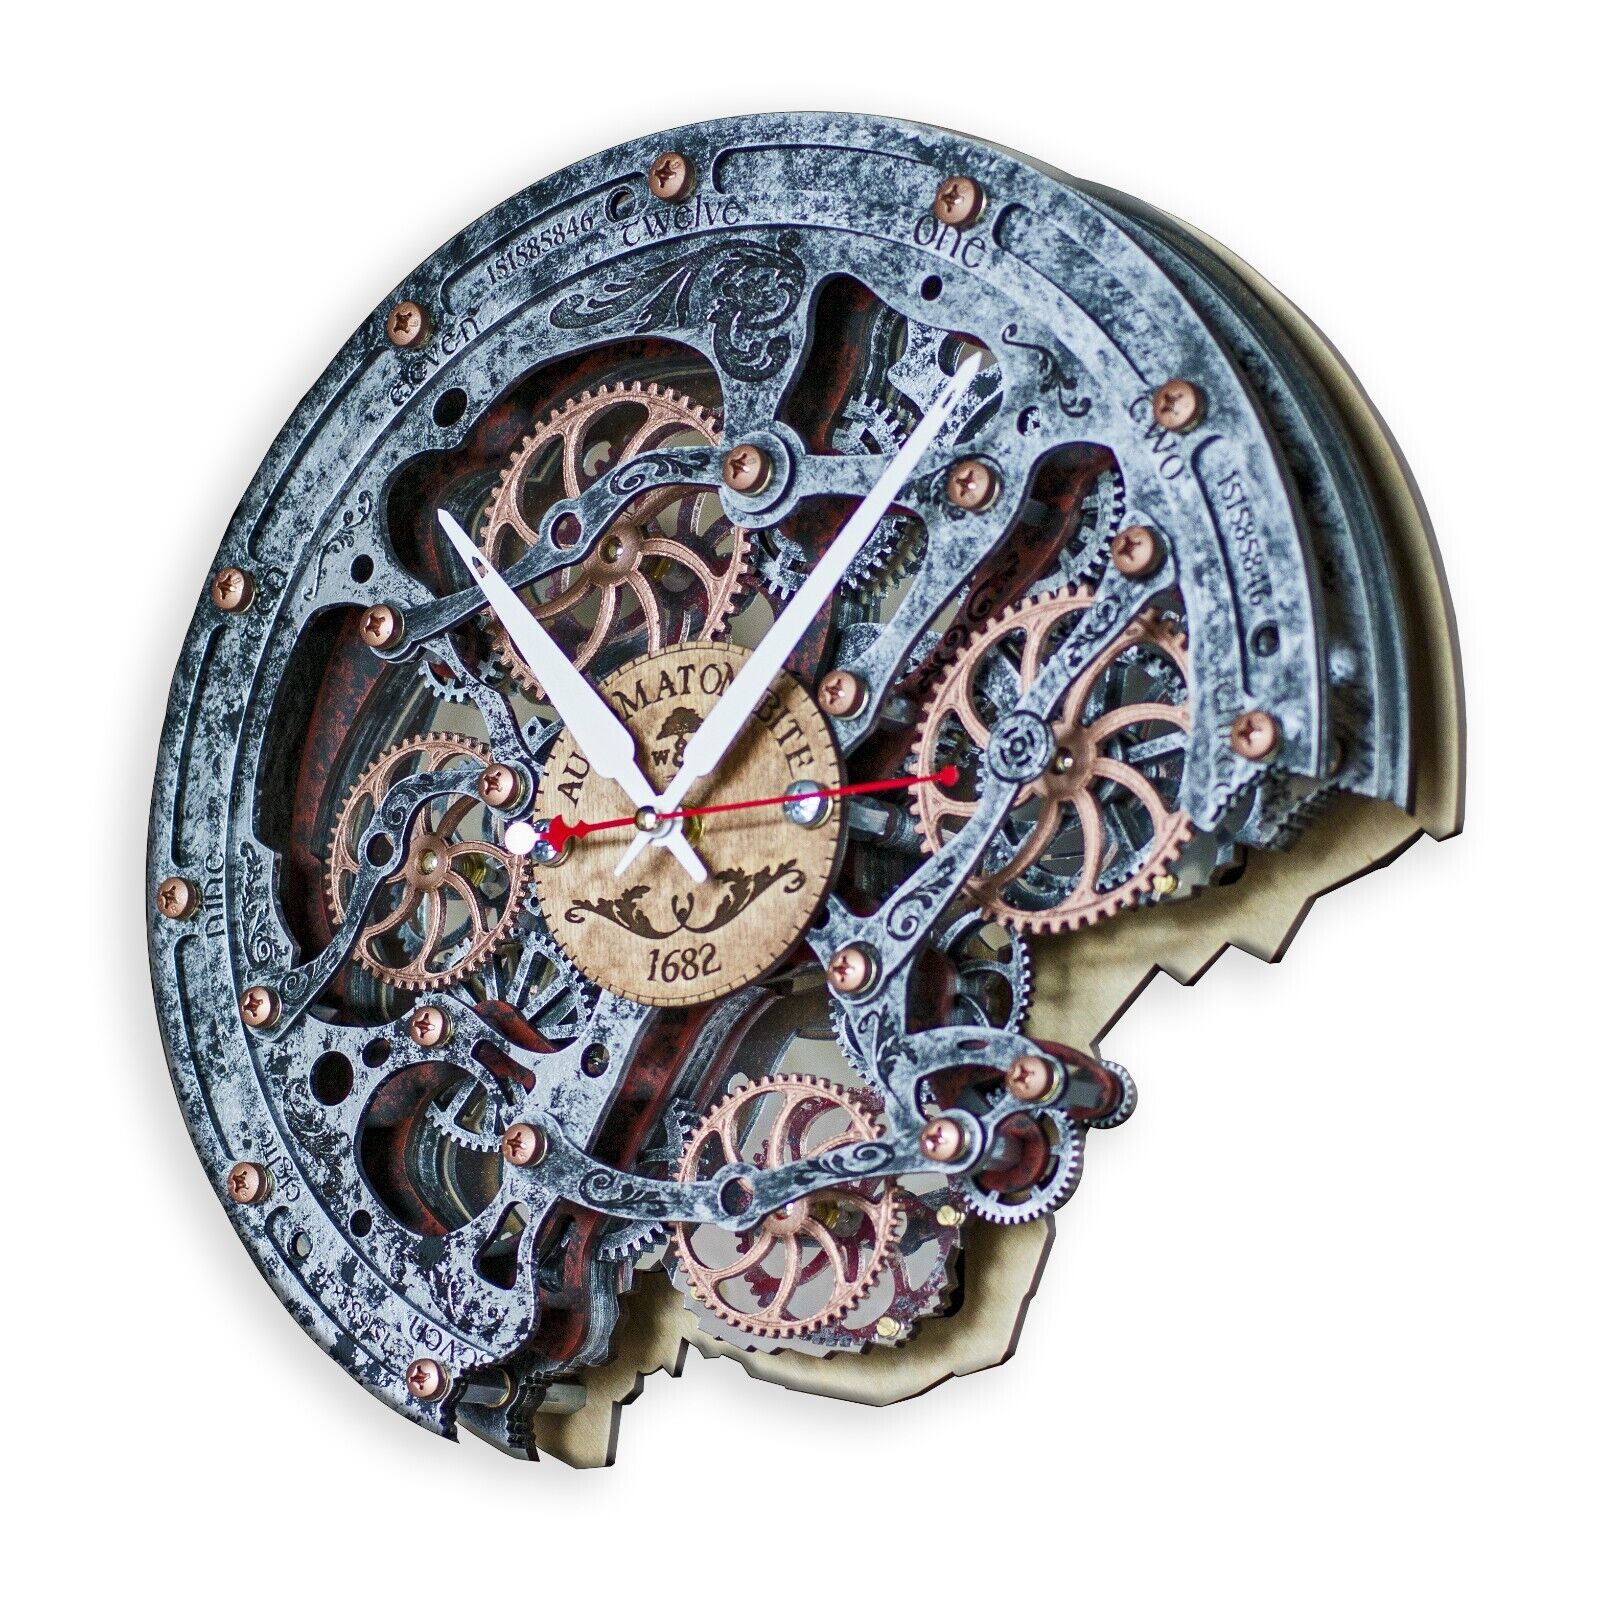 Automaton Bite Large Moving Gears Wall Clock 1682 MetalJacket Steampunk Loft Art